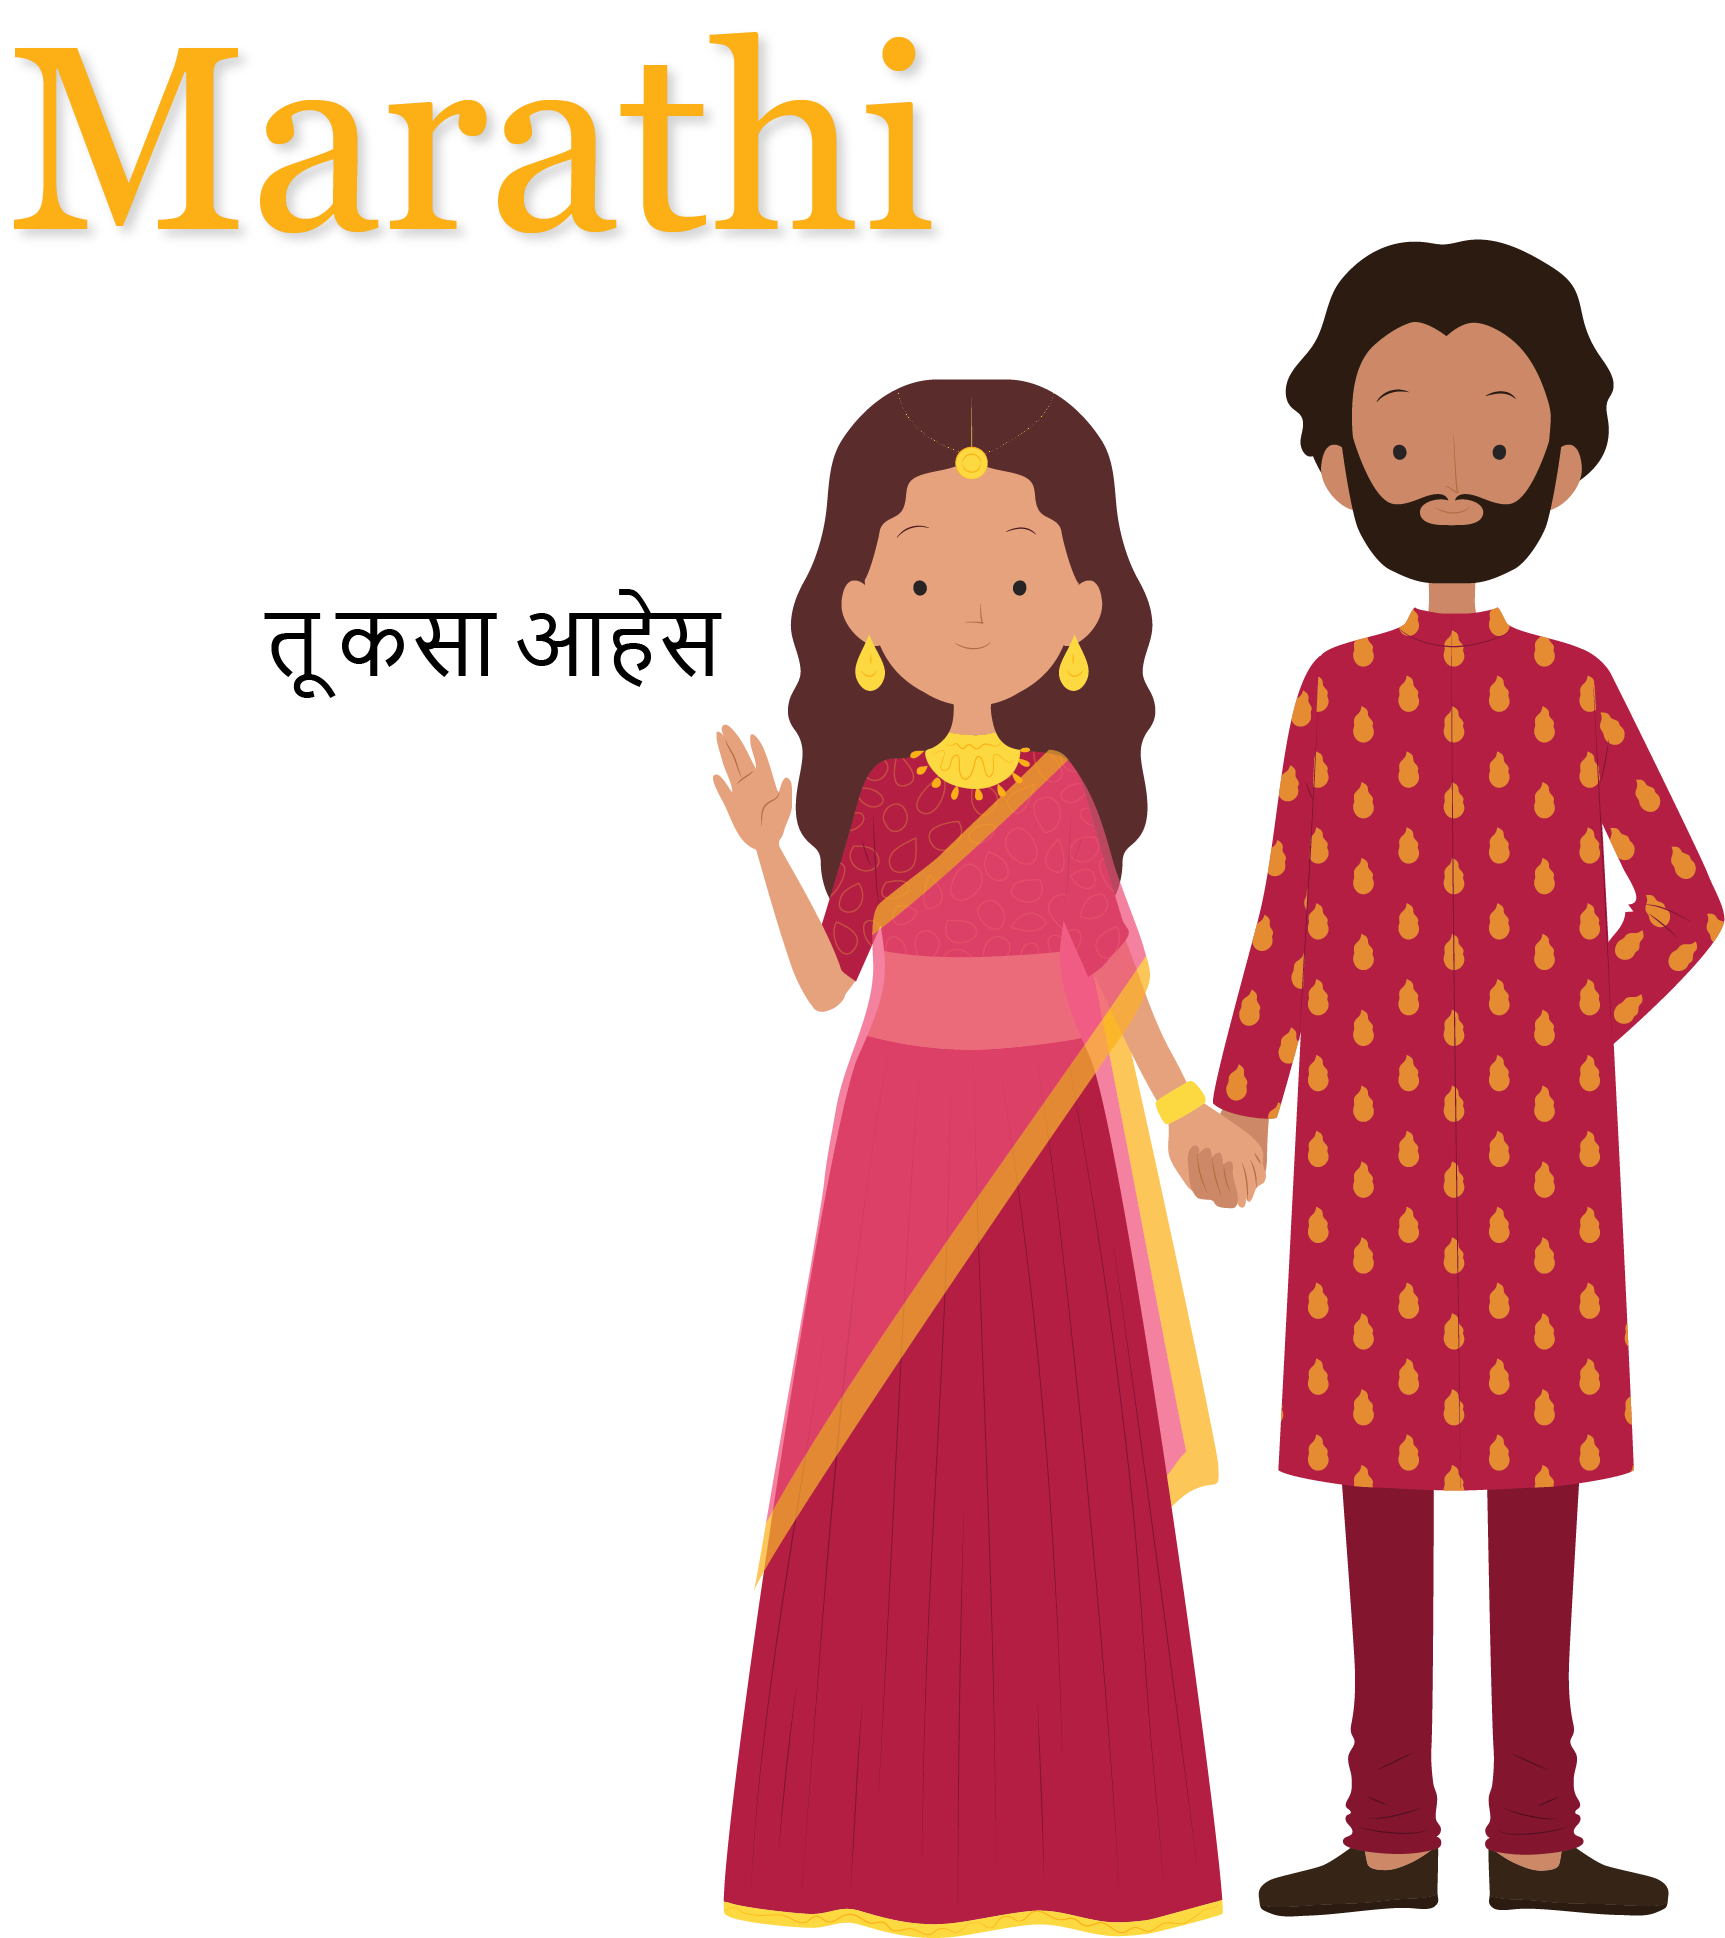 Marathi - THE POLYGLOT